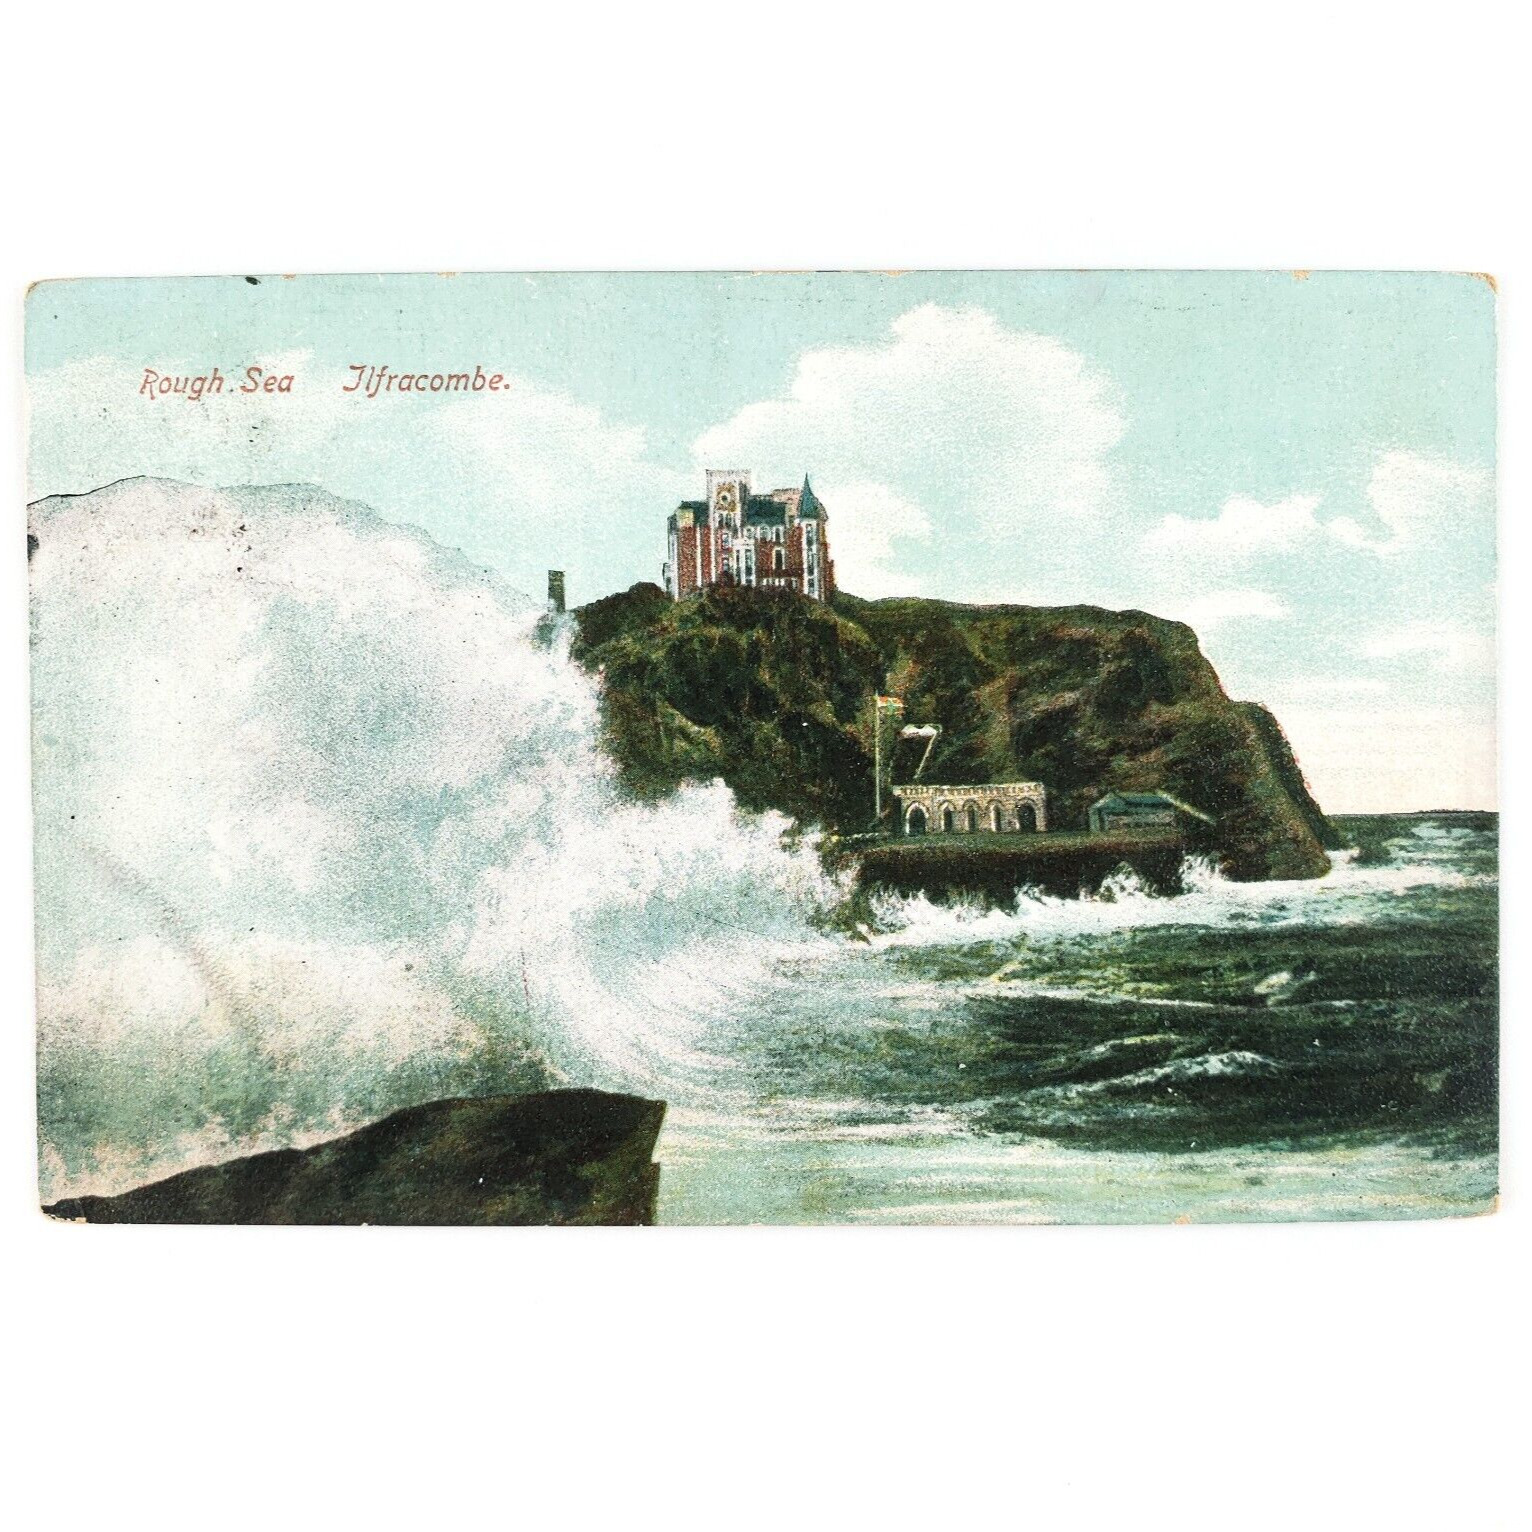 Ilfracombe Rough Sea Resort Postcard c1919 North Devon Seaside England UK C1916